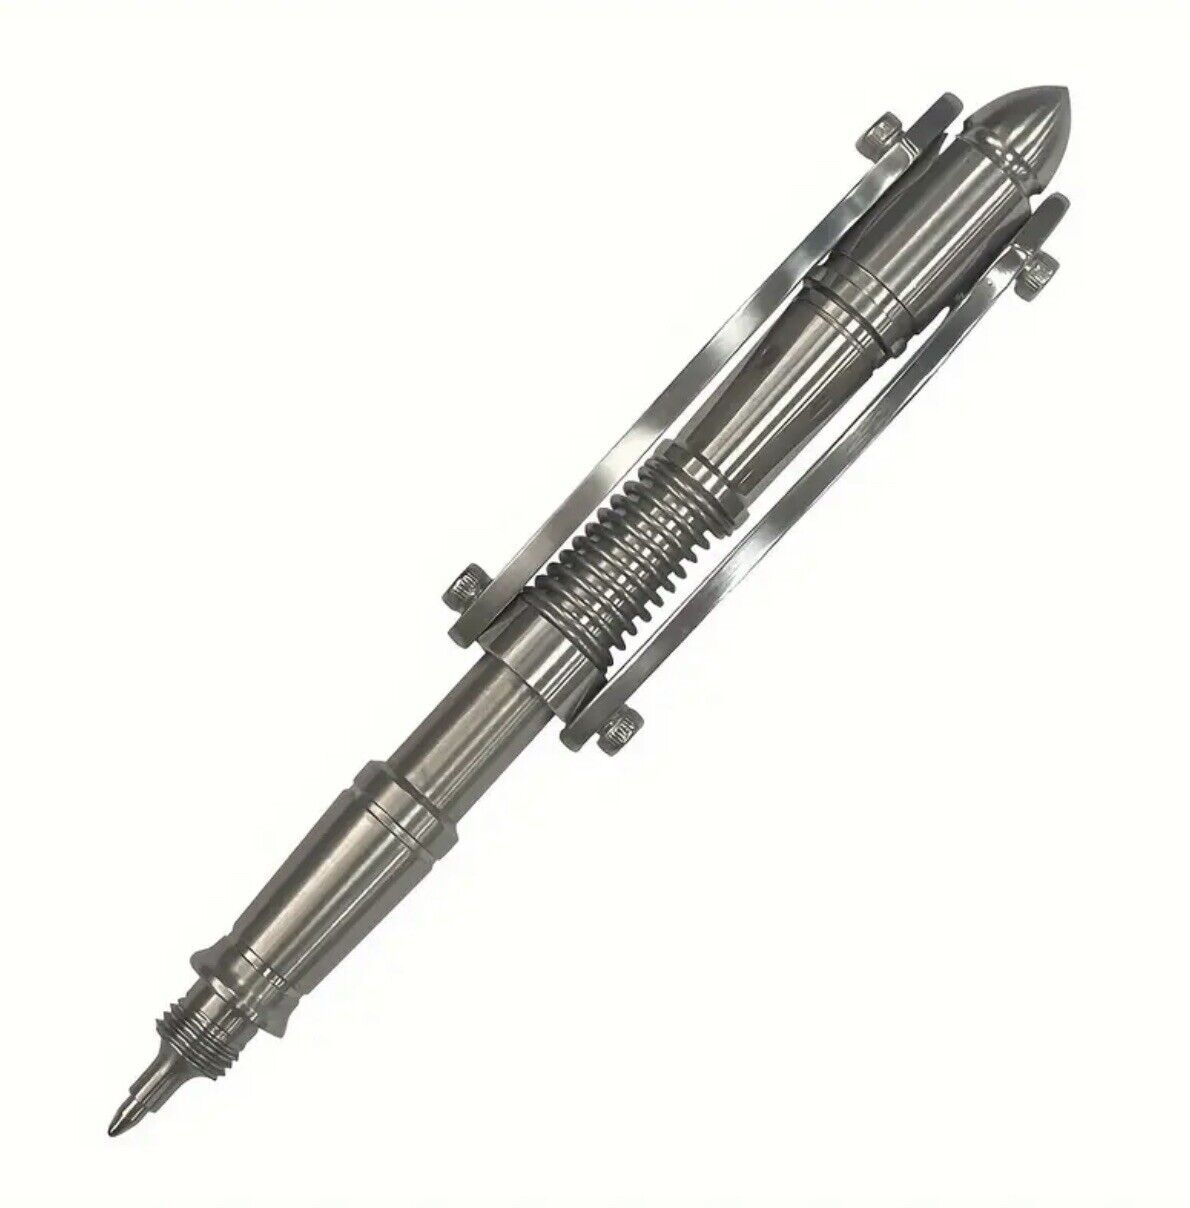 Handmade Stainless Steel Pen, Amazing Unique Design Multi-functional Tool, Gift